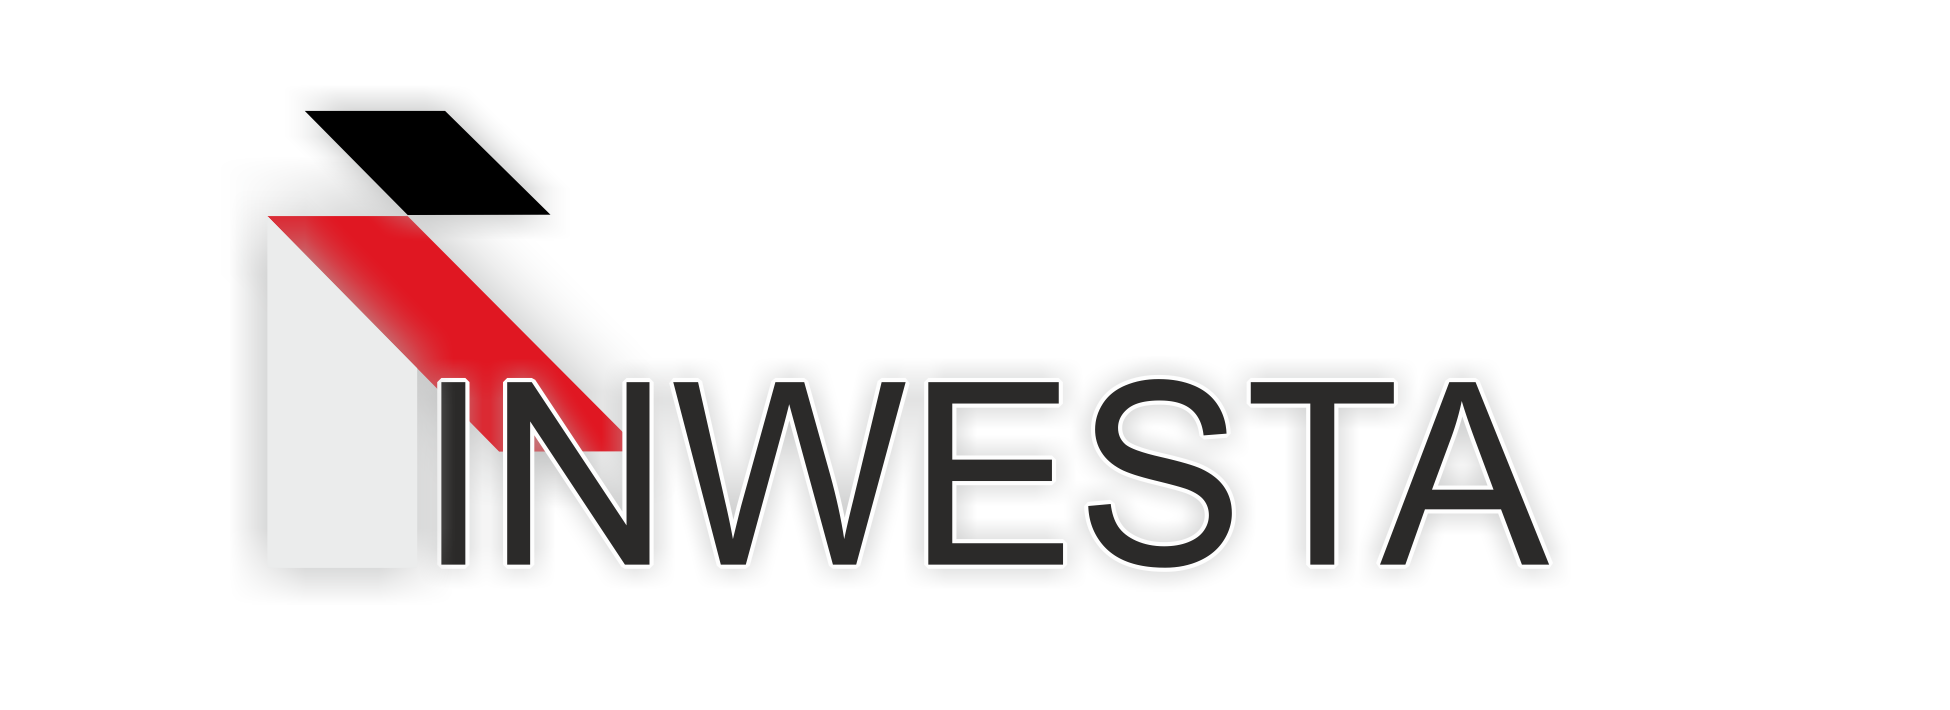 Inwesta logo